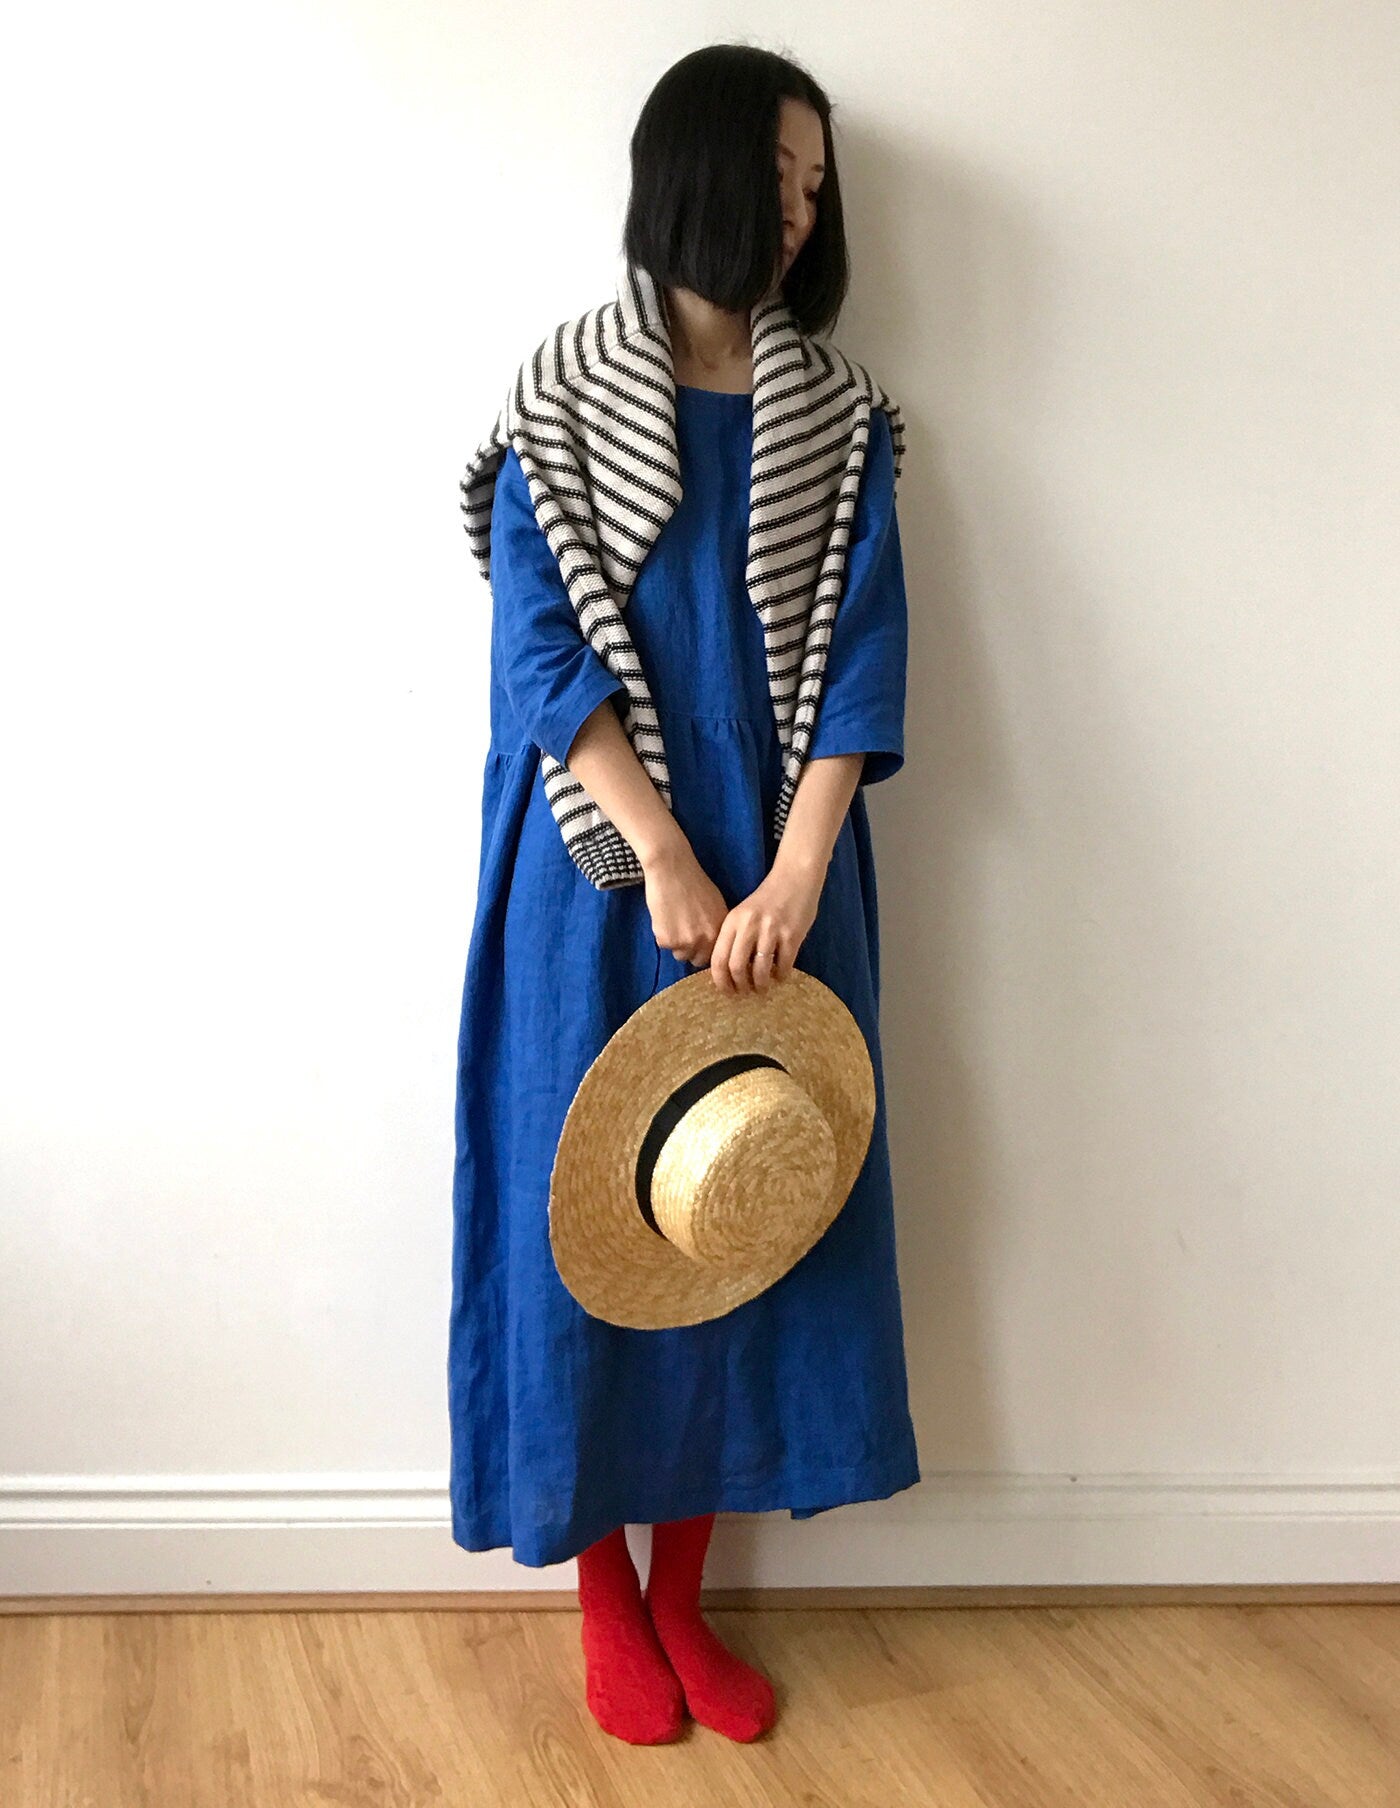 French blue linen dress